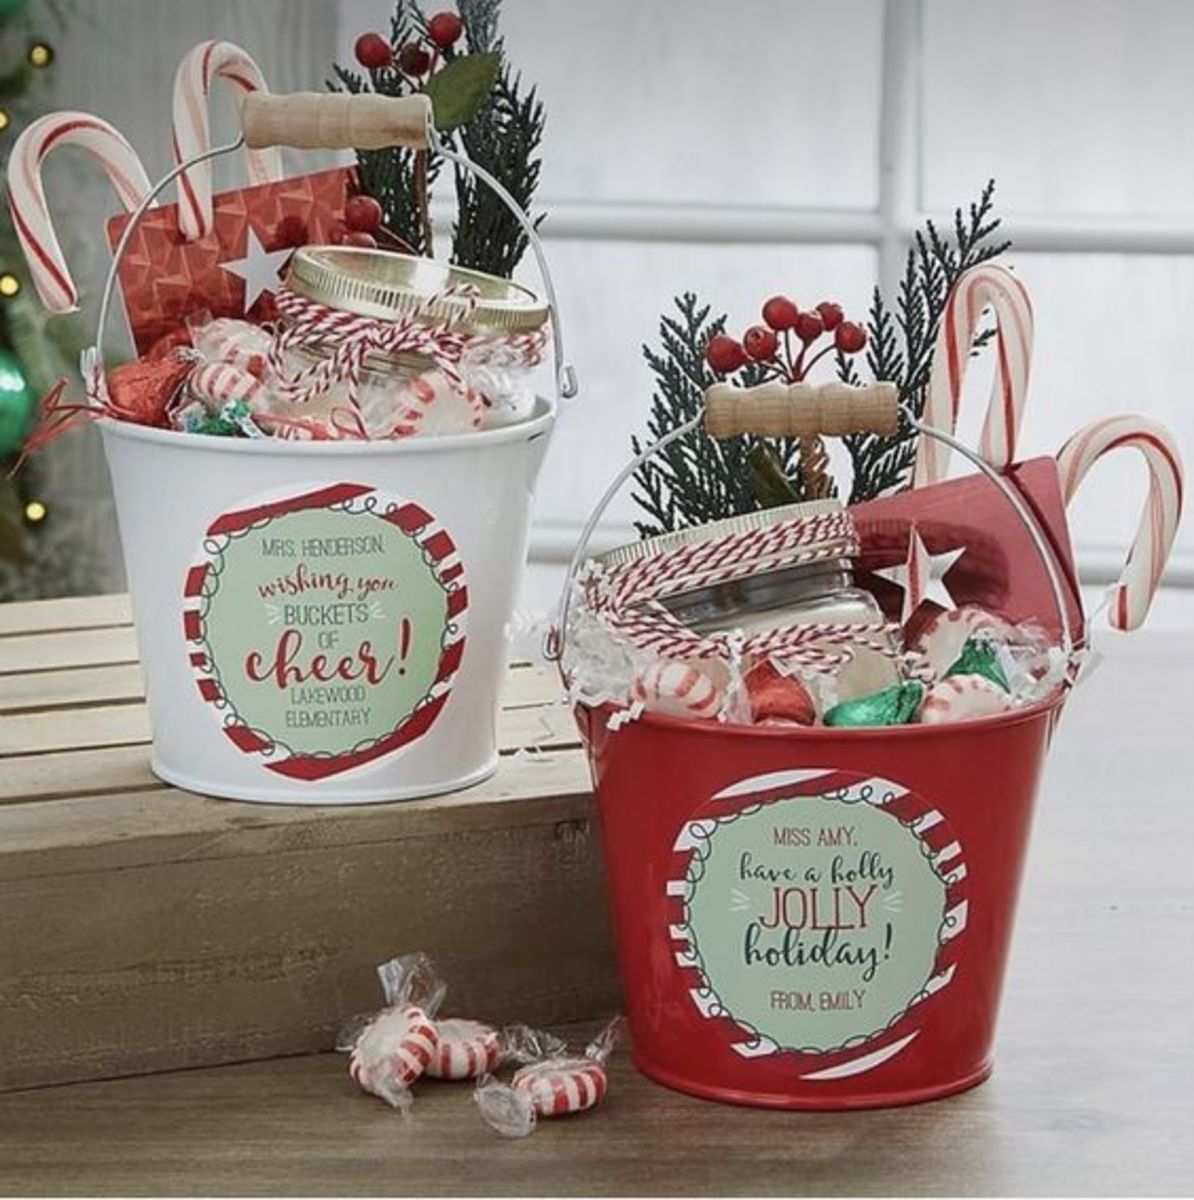 https://images.saymedia-content.com/.image/t_share/MjAxNjEyMzI4MTI1MjEyNTIx/easy-christmas-gift-ideas-for-neighbors.jpg